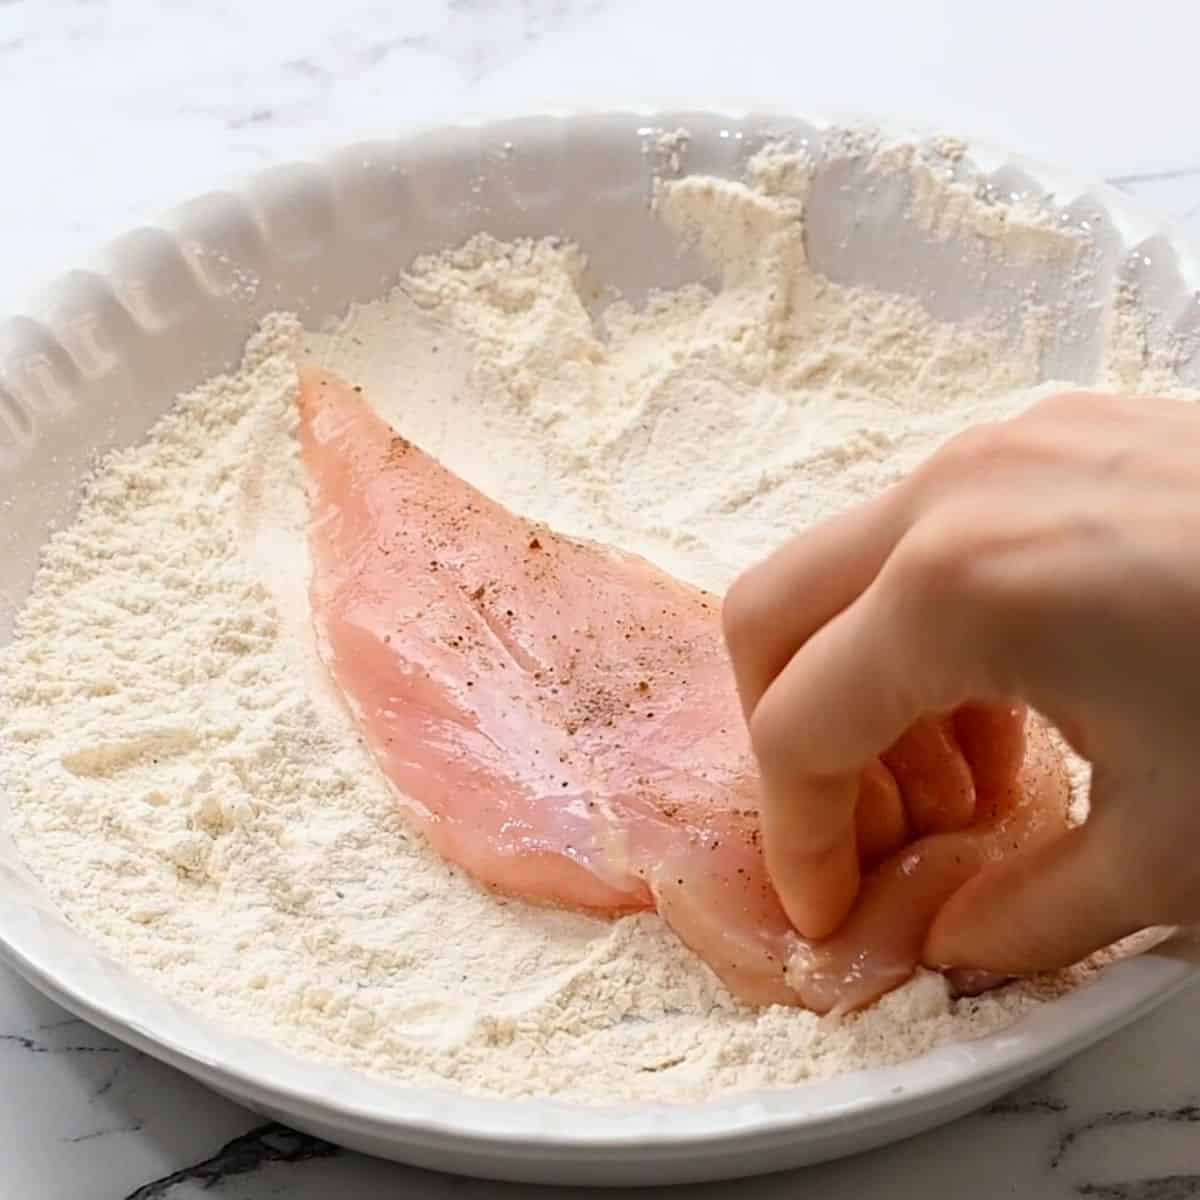 Hand showing dredging a chicken cutlet through seasoned flour.